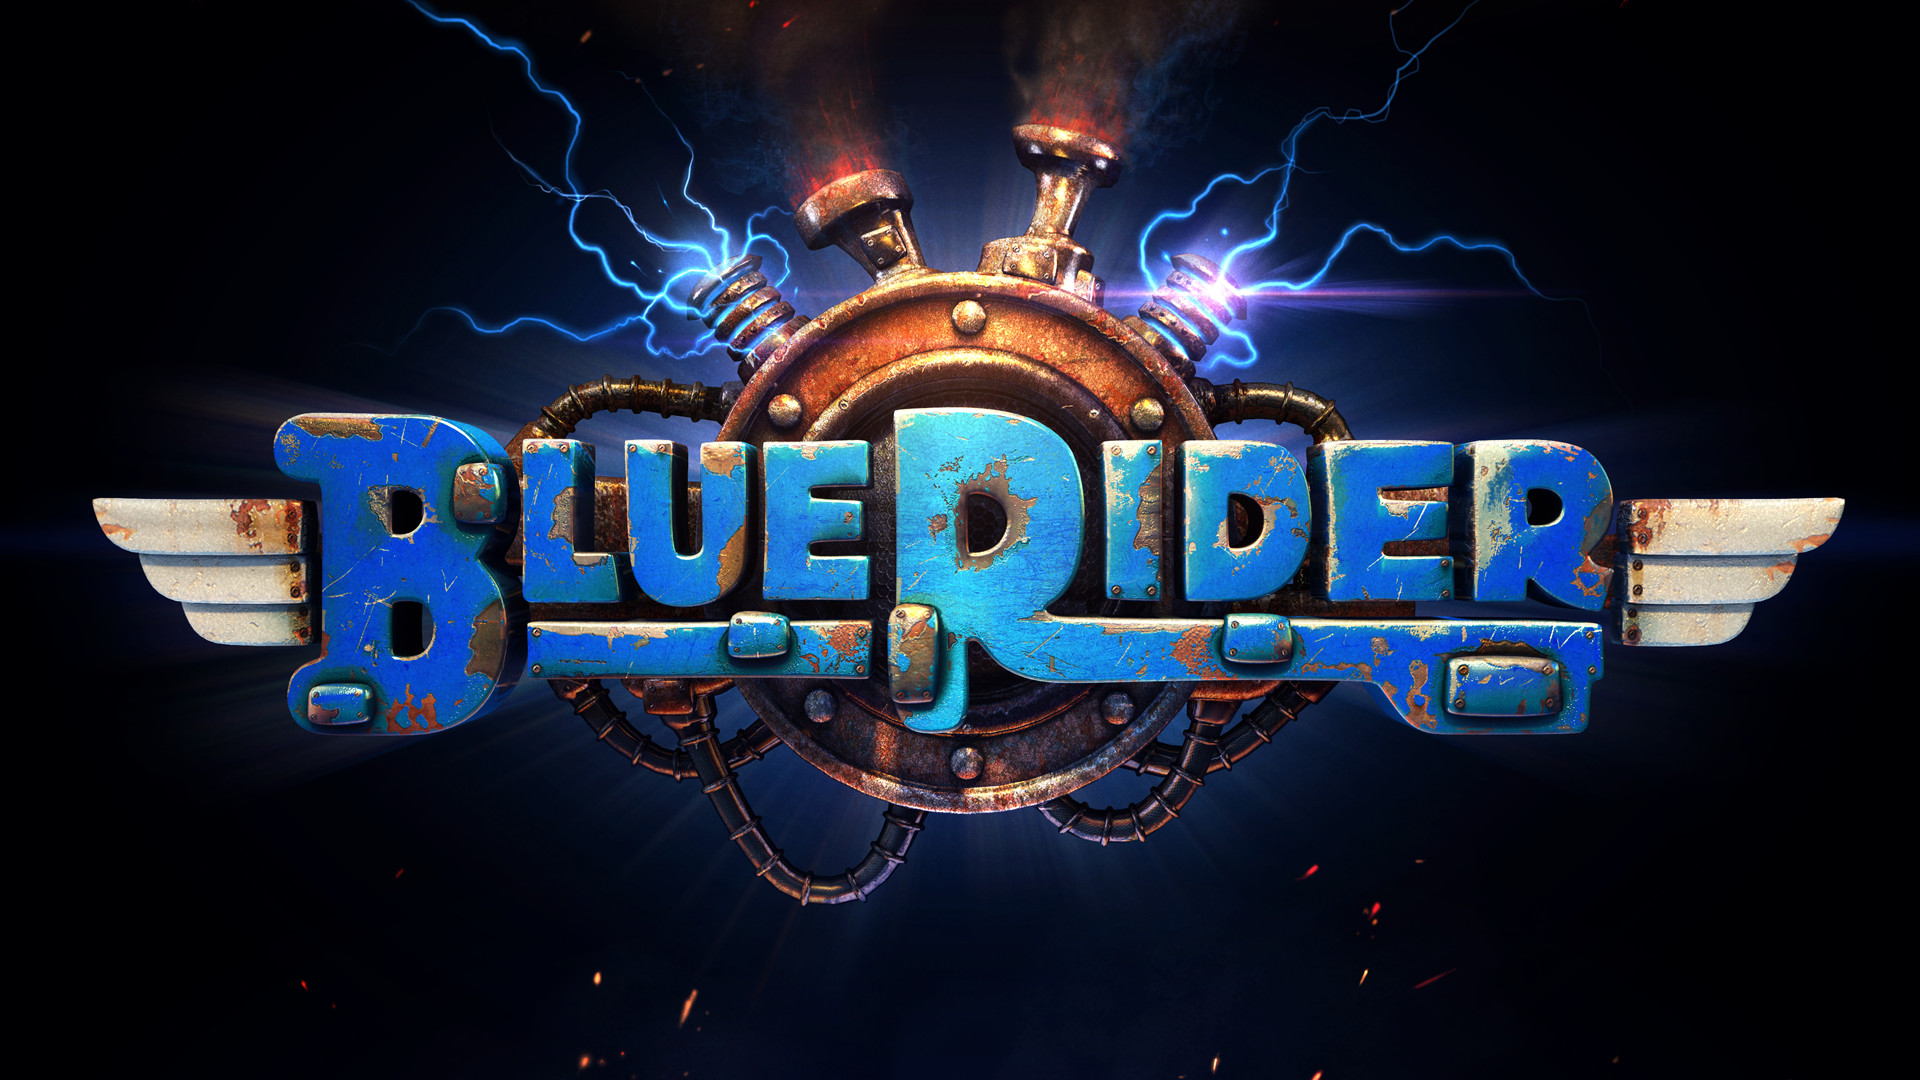 Blue Rider - Original Soundtrack Featured Screenshot #1